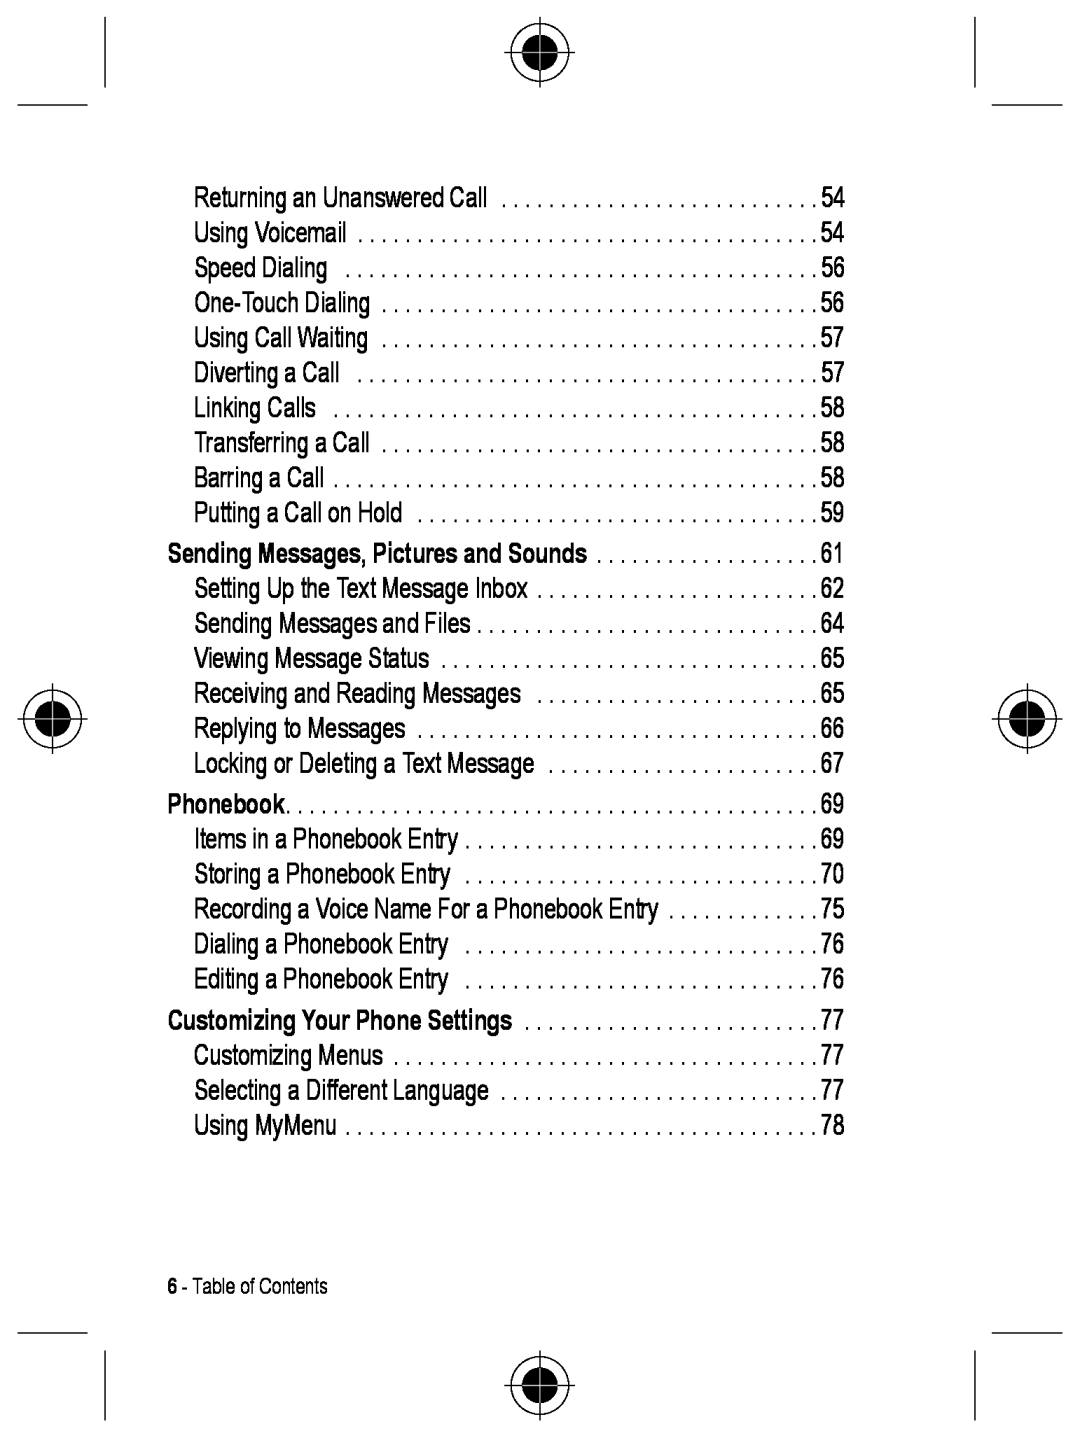 Motorola C330 manual Table of Contents 